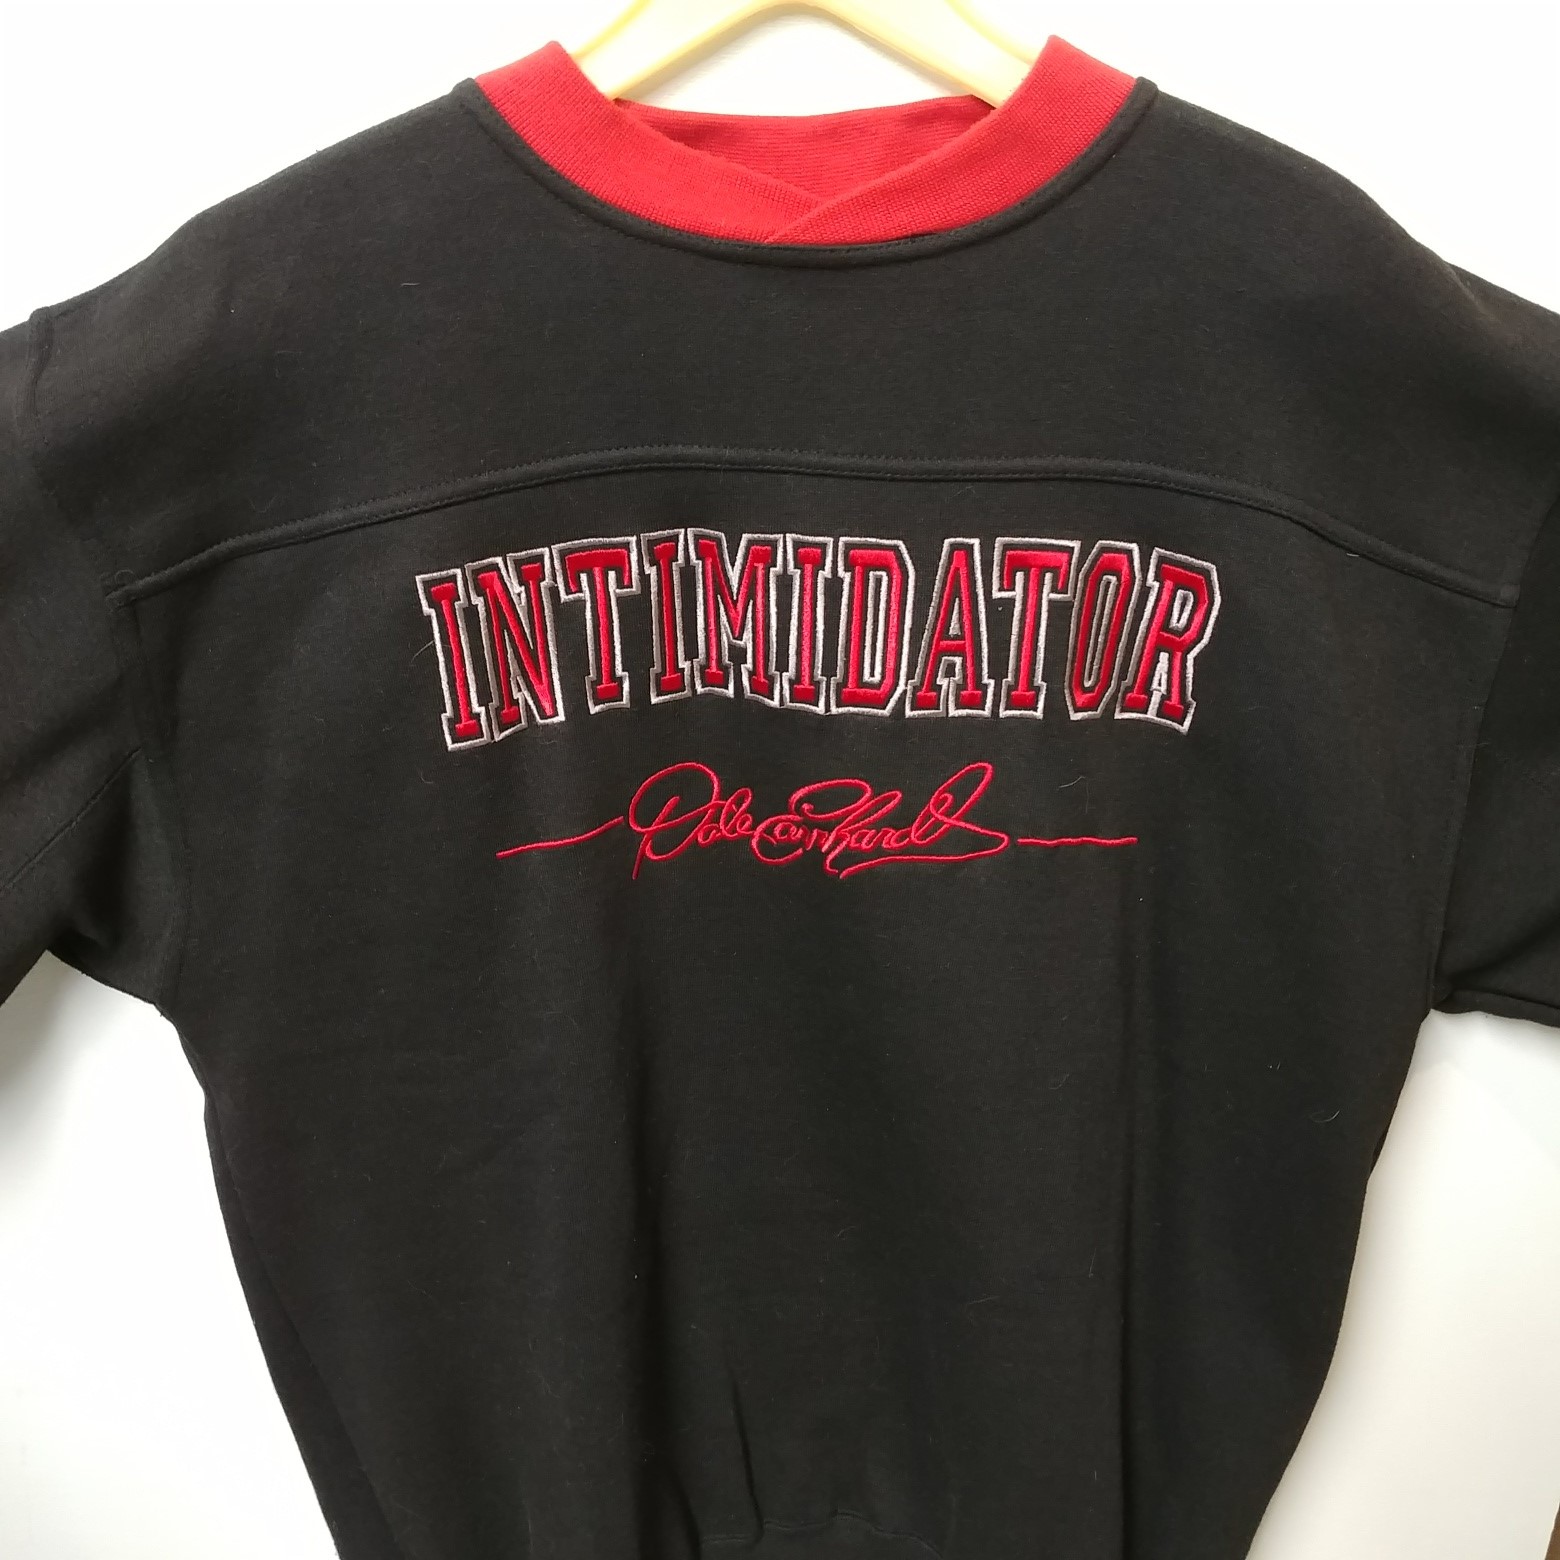 1997 Dale Earnhardt "Intimidator" fleece